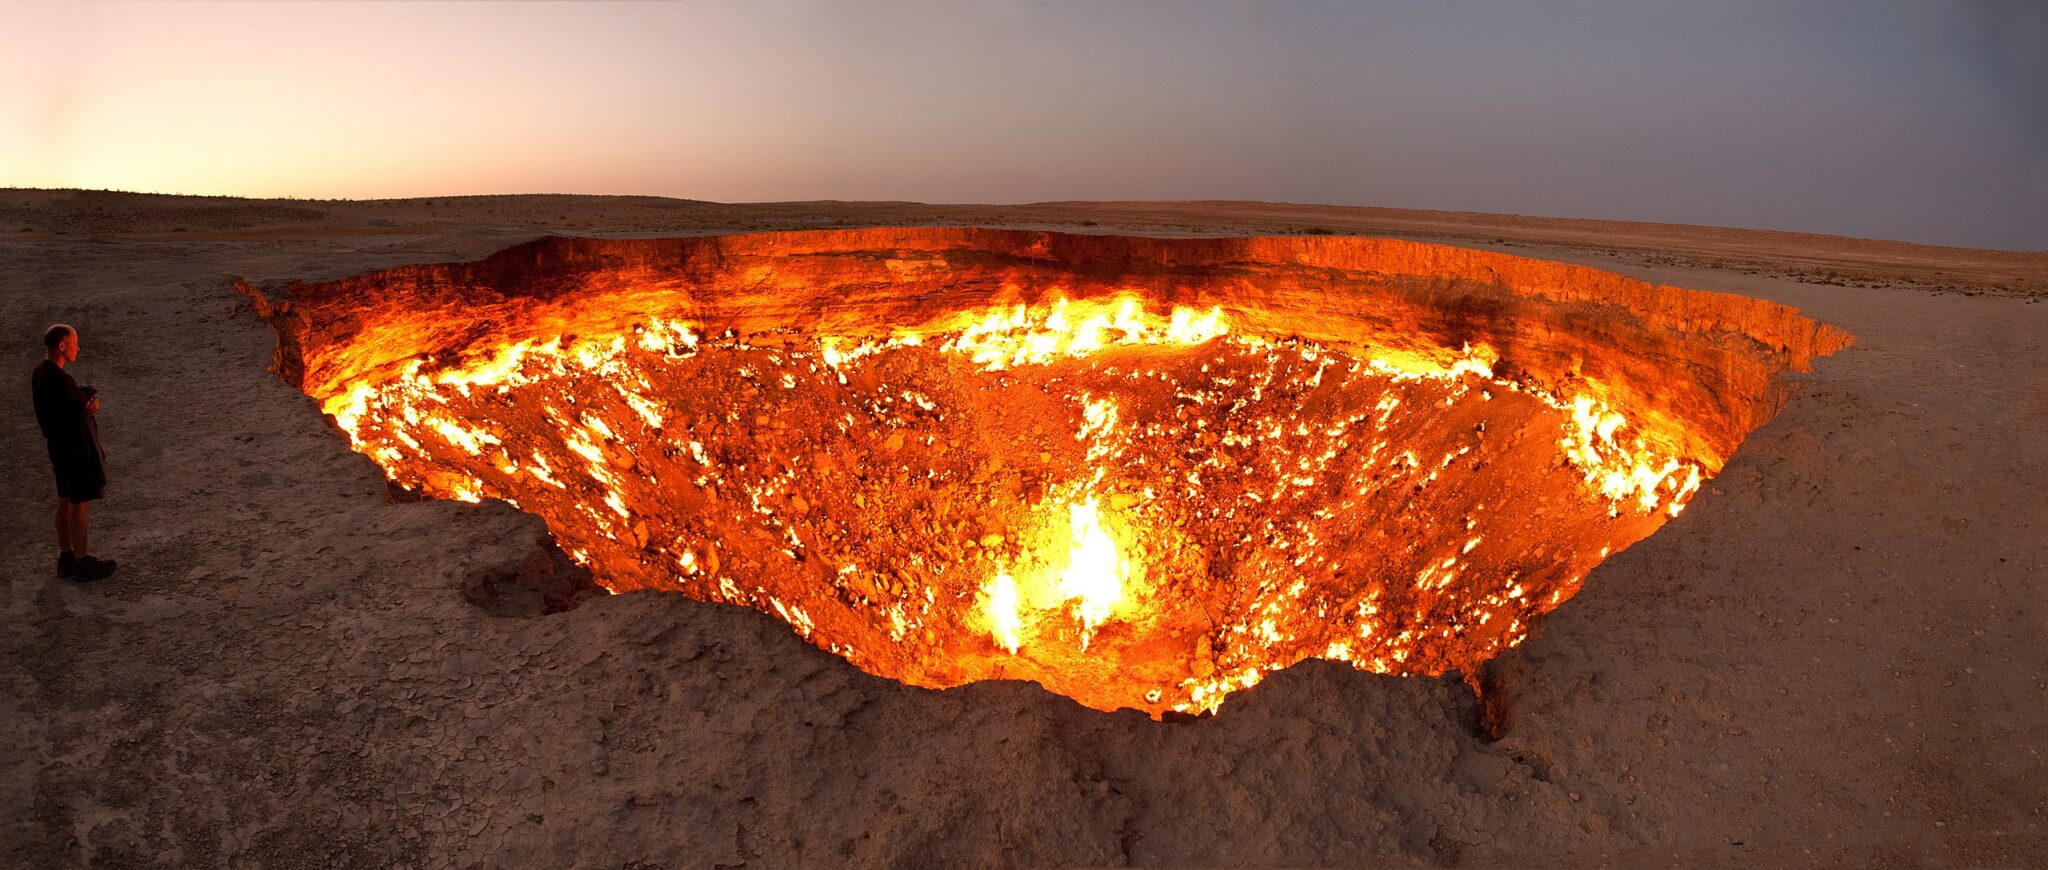 Газовый кратер в Дарвазе. Фото Tormod Sandtorv / Wikipedia / CC 2.0